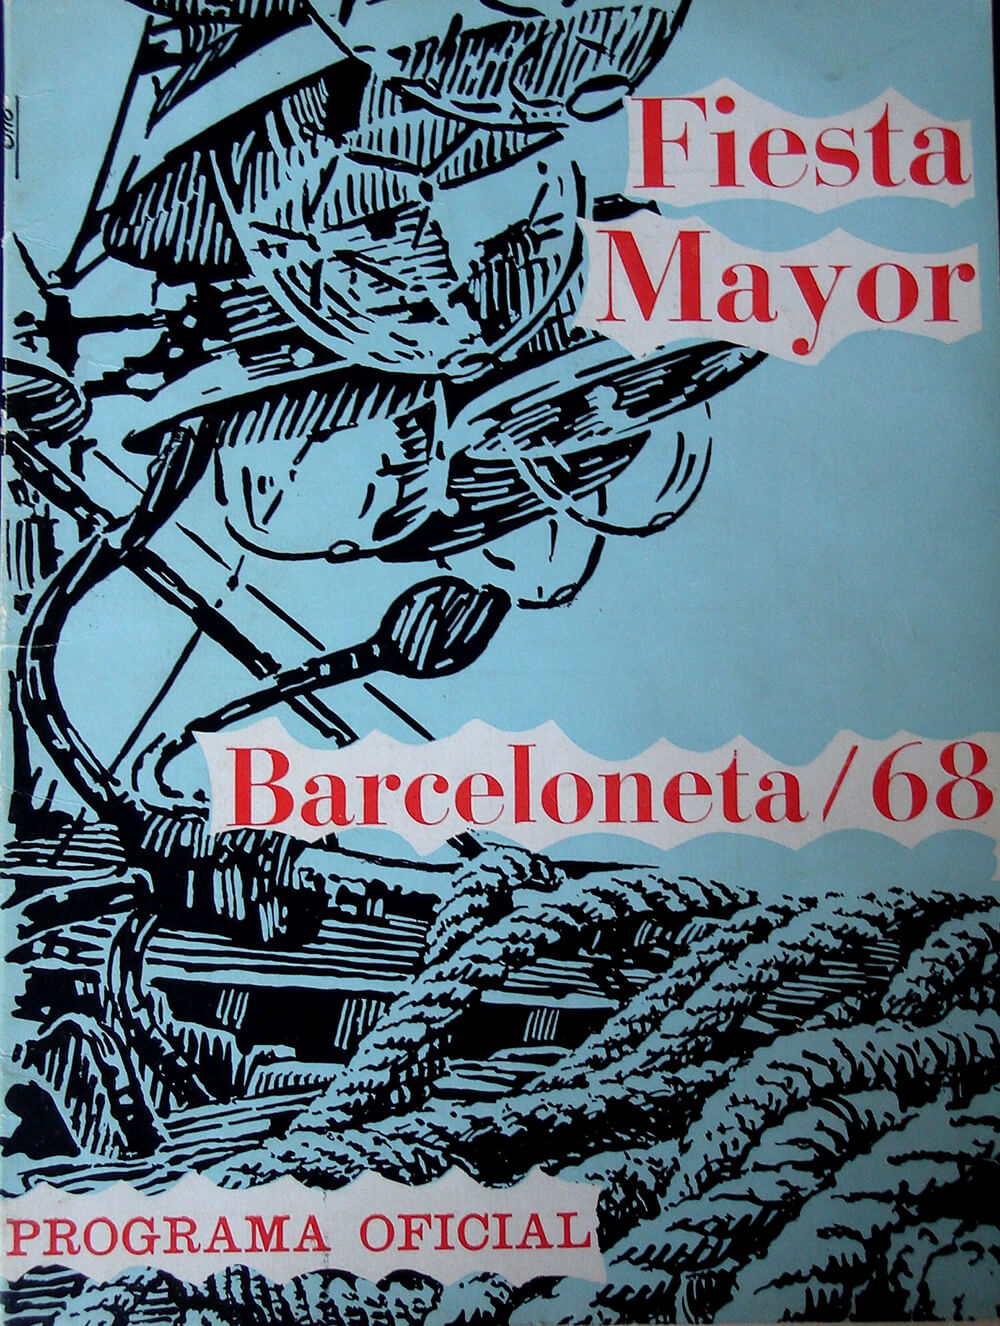 1968. Programa oficial Barceloneta 68